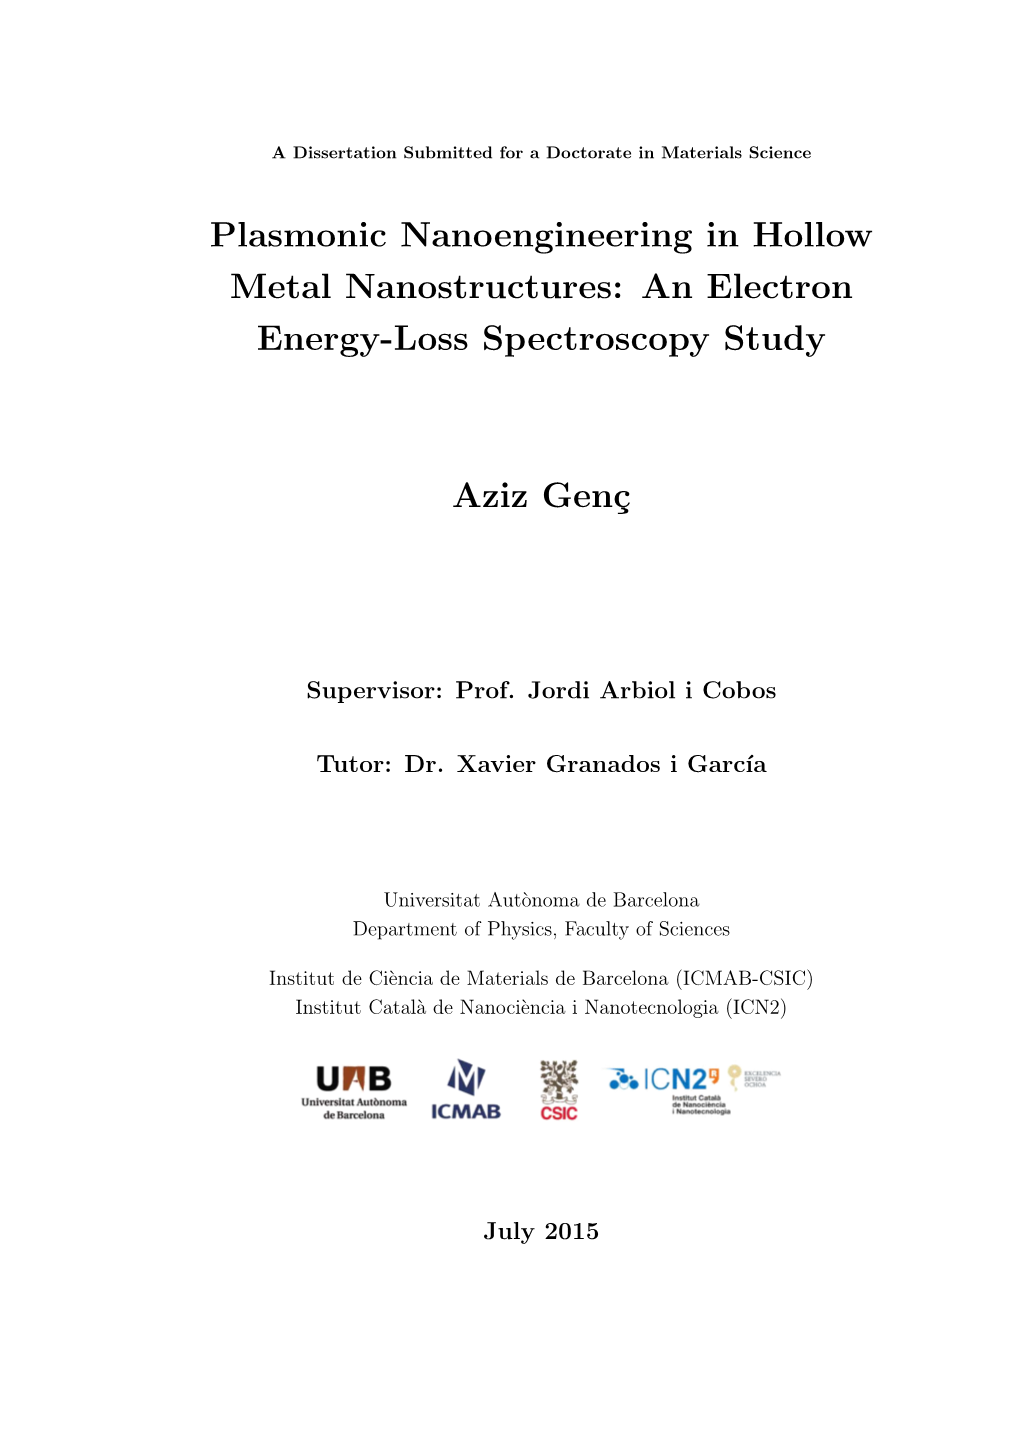 Plasmonic Nanoengineering in Hollow Metal Nanostructures: an Electron Energy-Loss Spectroscopy Study